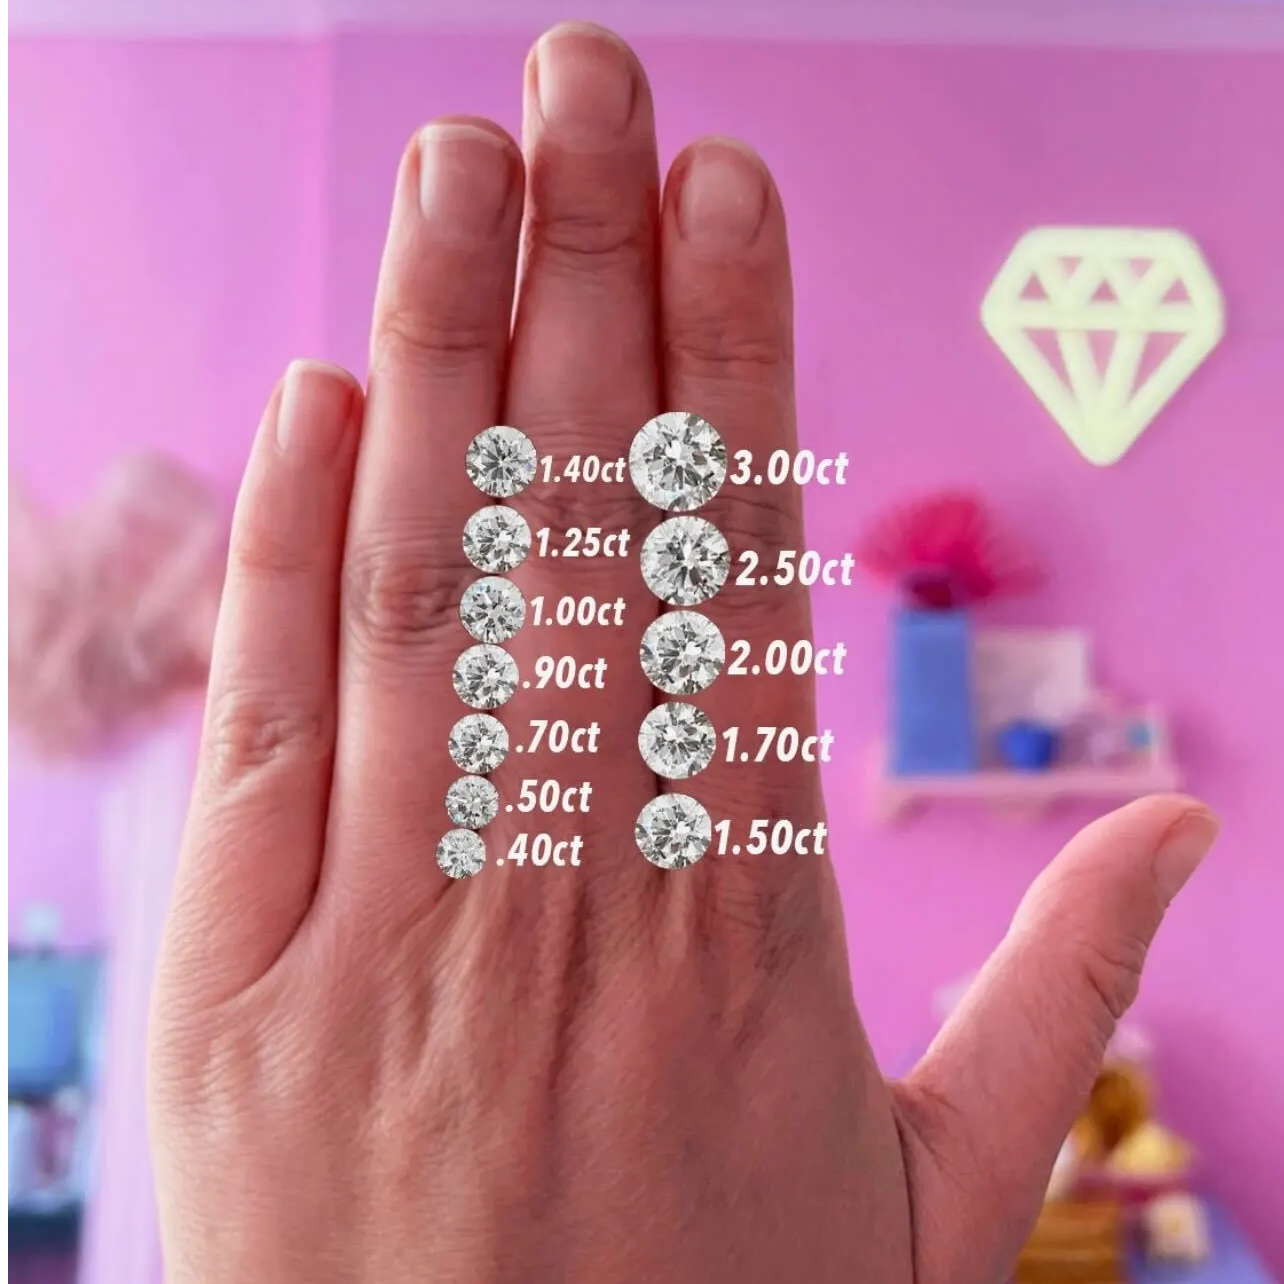 different diamond carat sizes on a hand